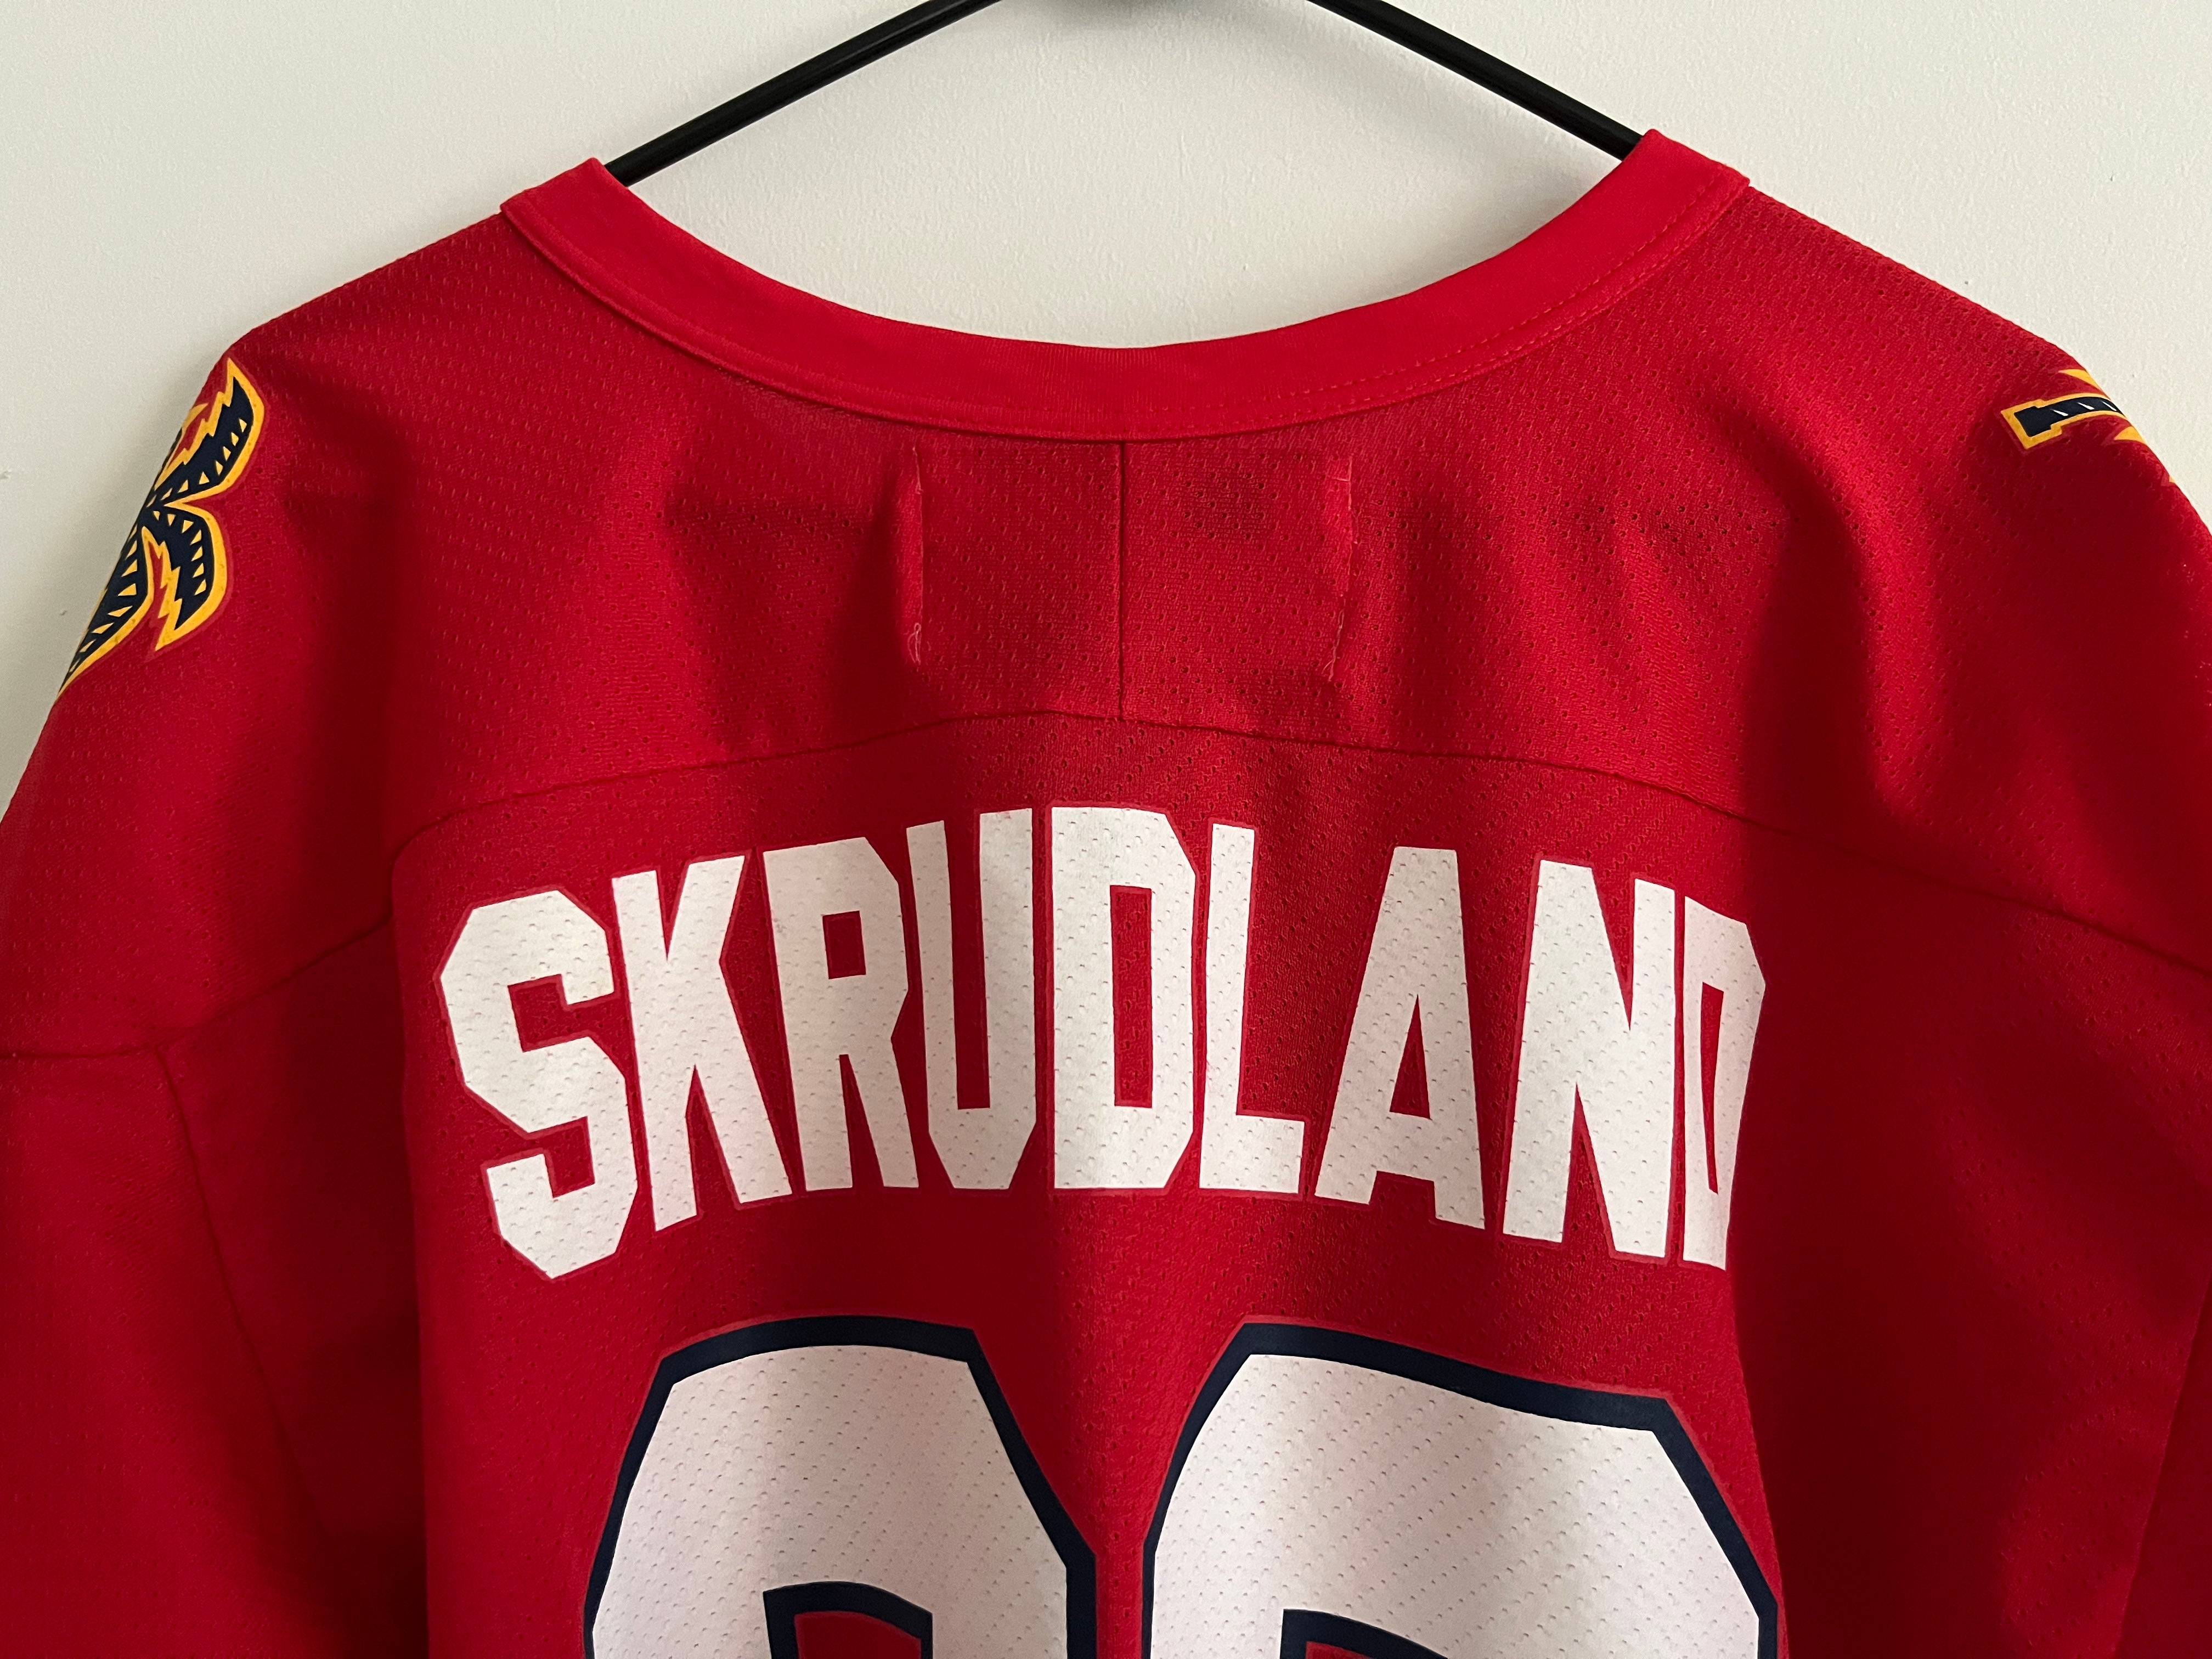 Brian Skrudland 1996 Florida Panthers Away Throwback NHL Hockey Jersey